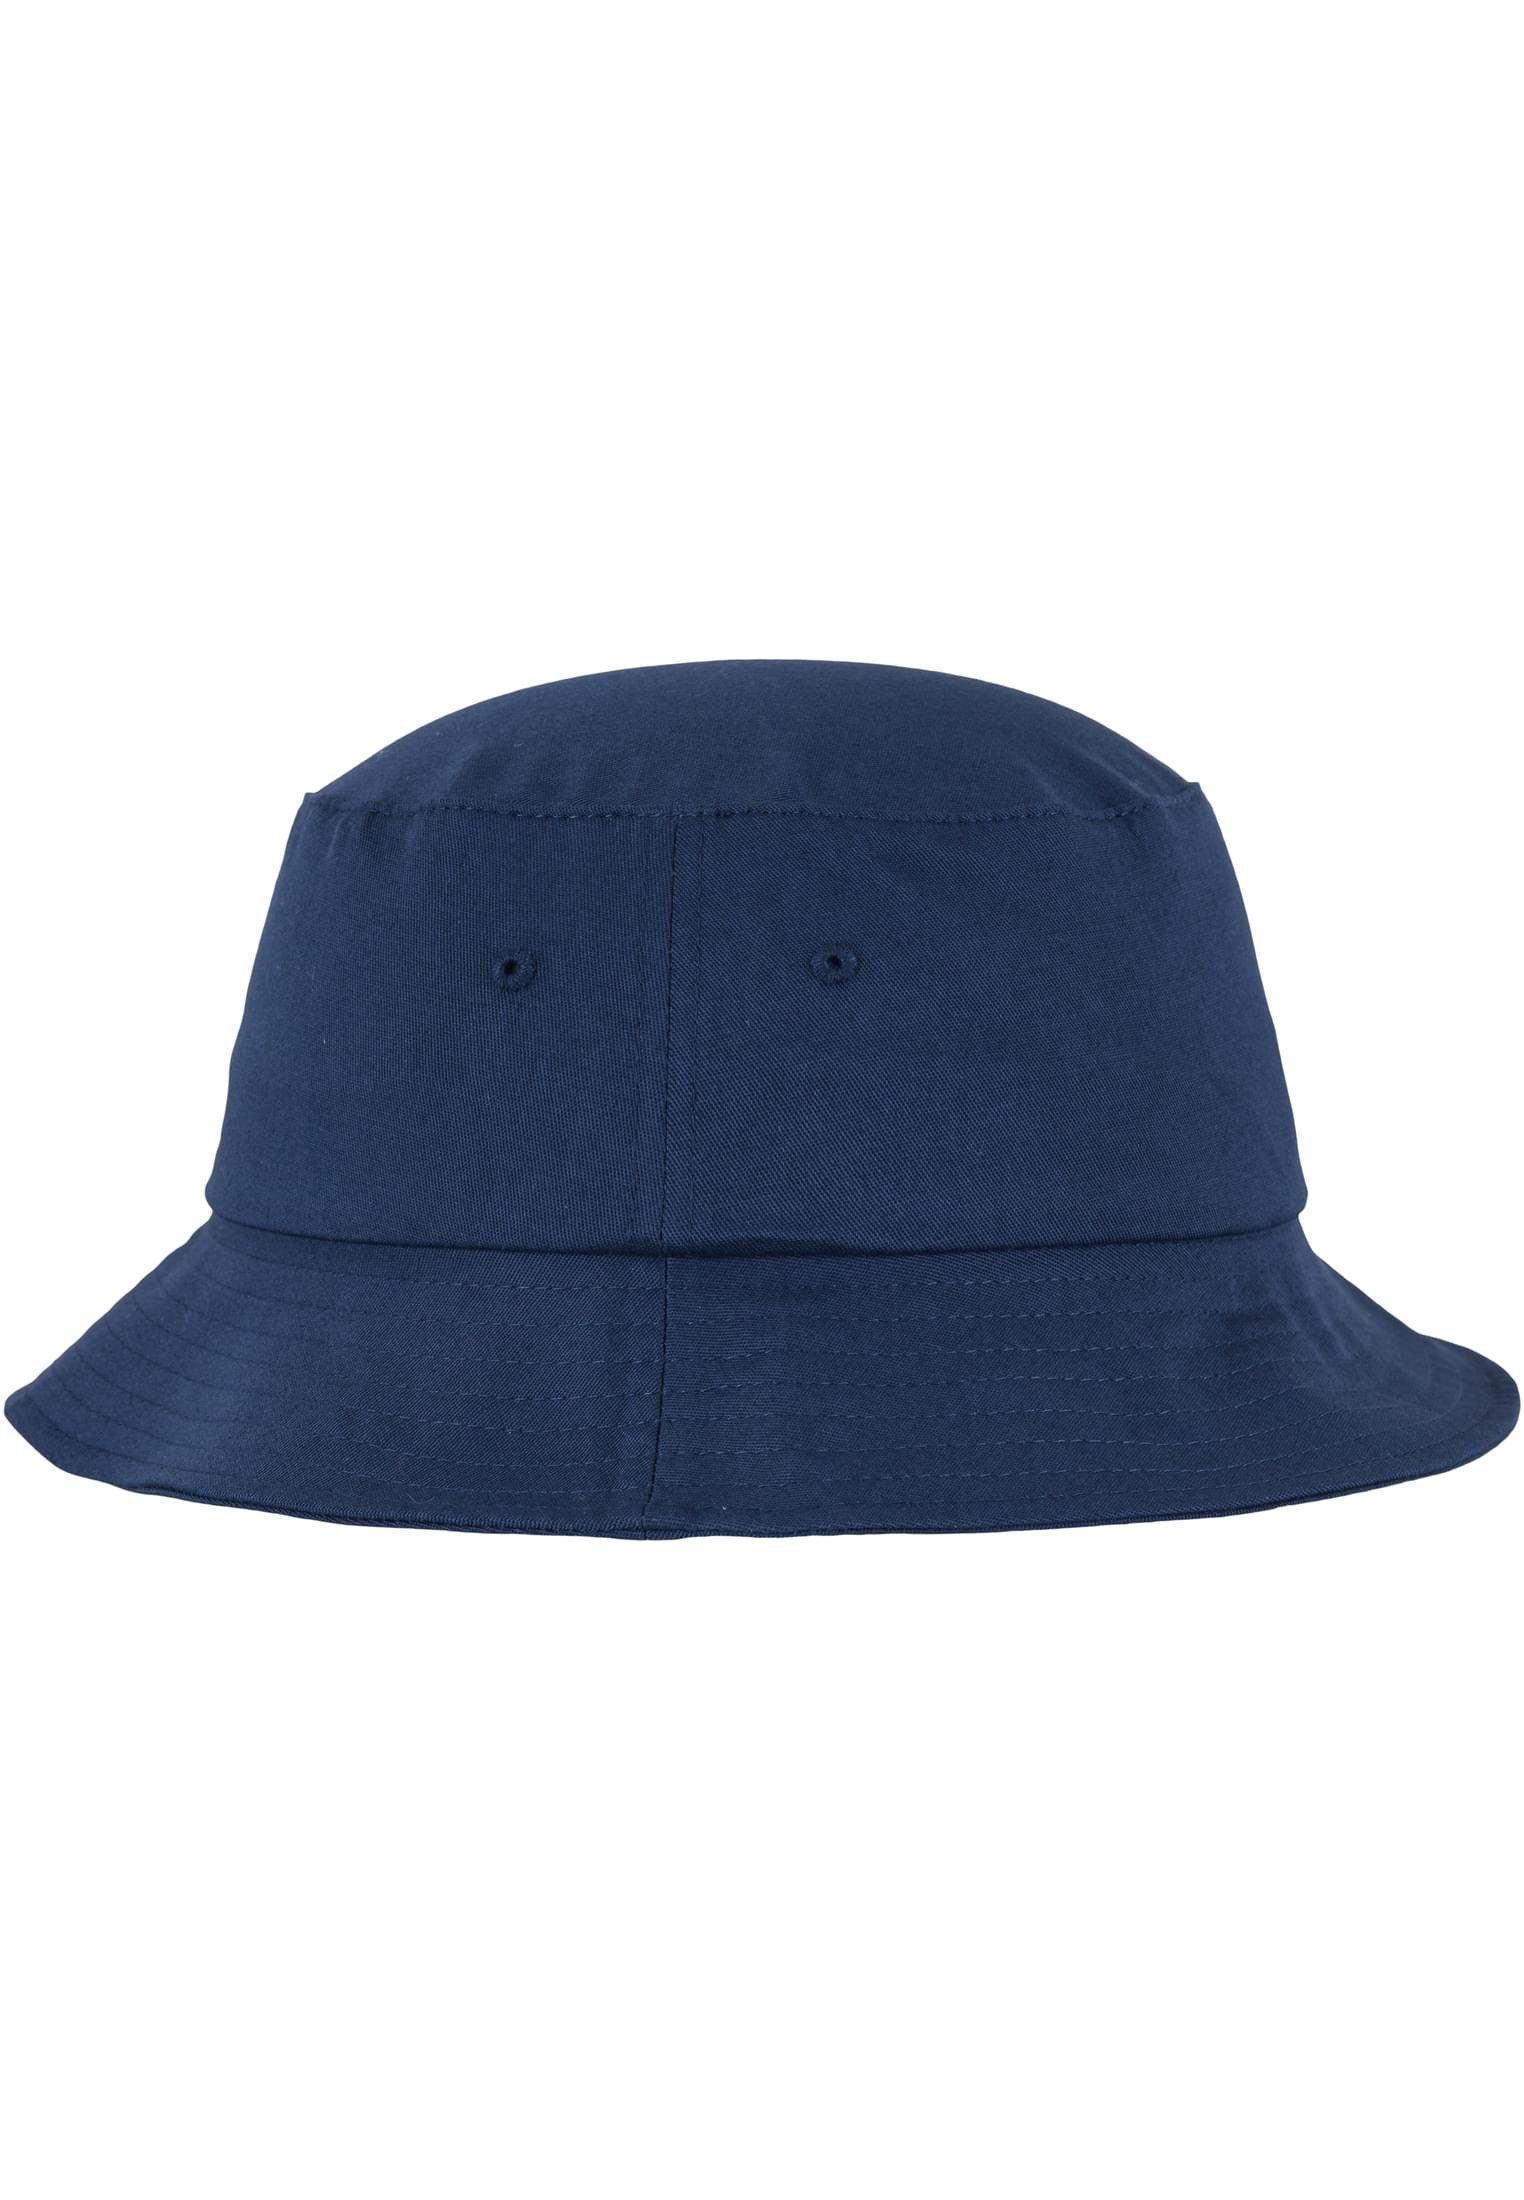 Hat navy Flexfit Bucket Twill Accessoires Flex Cotton Cap Flexfit